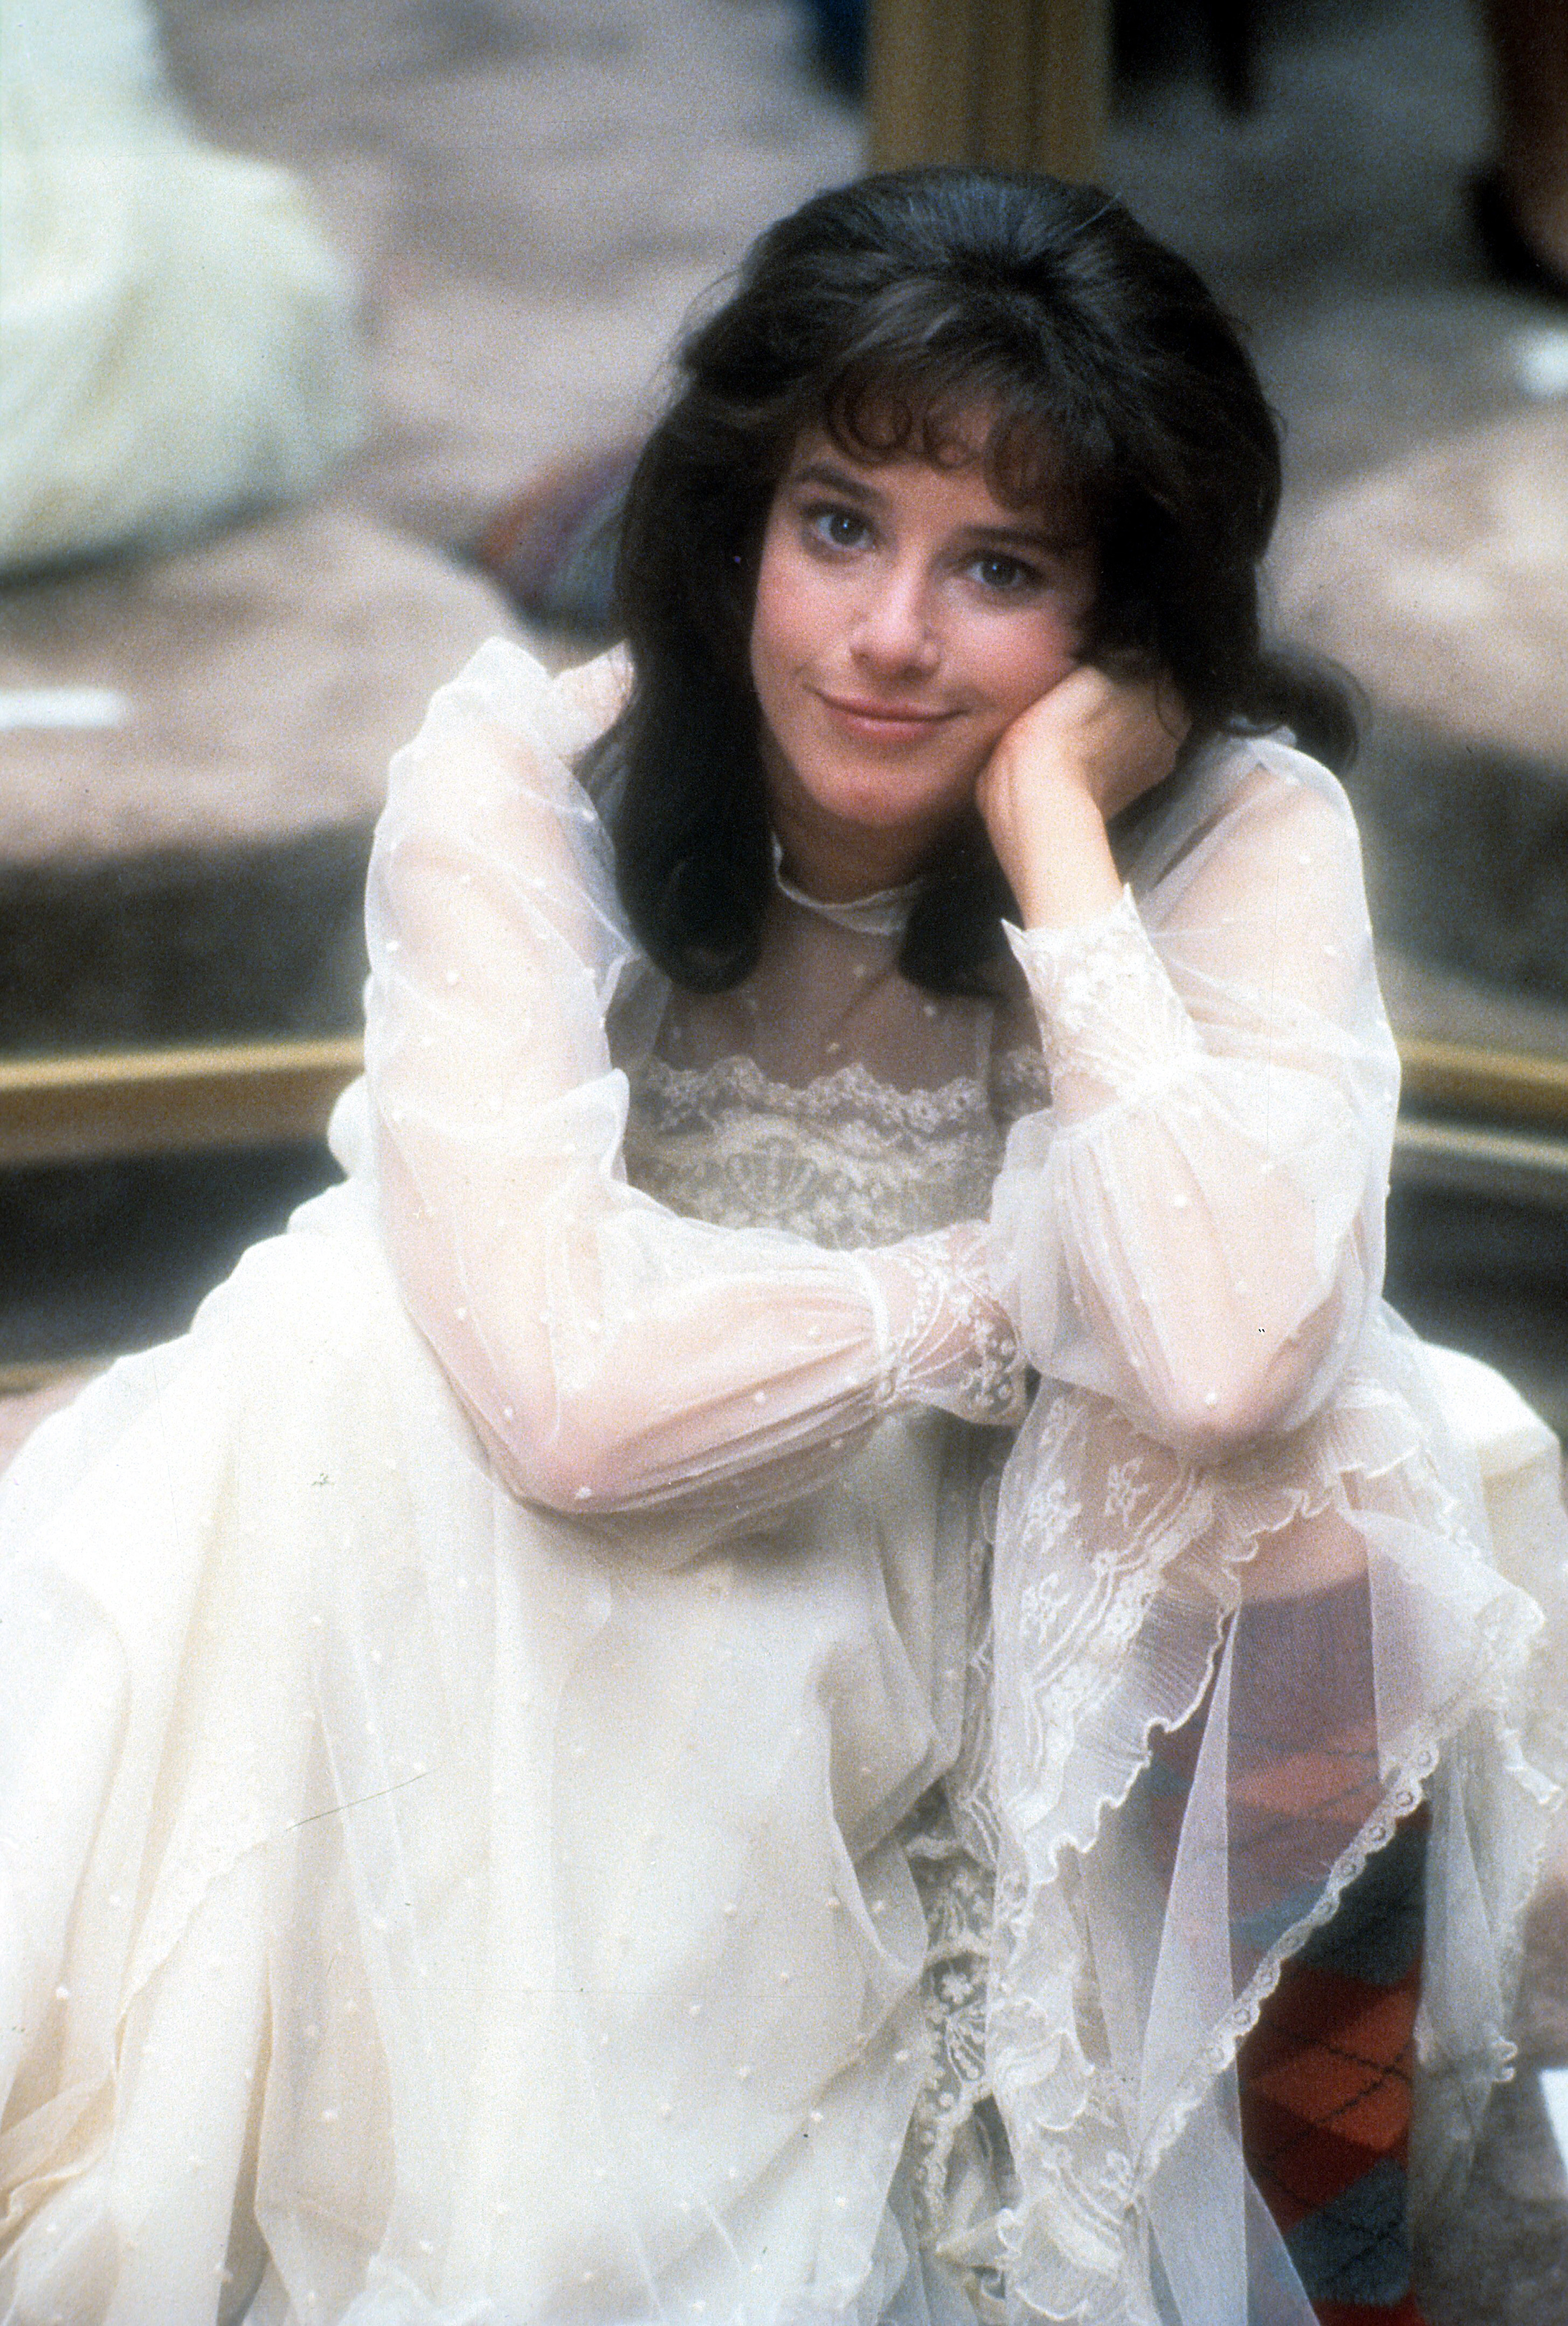 Debra Winger en el plató de "Terms of Endearment", en 1983 | Fuente: Getty Images